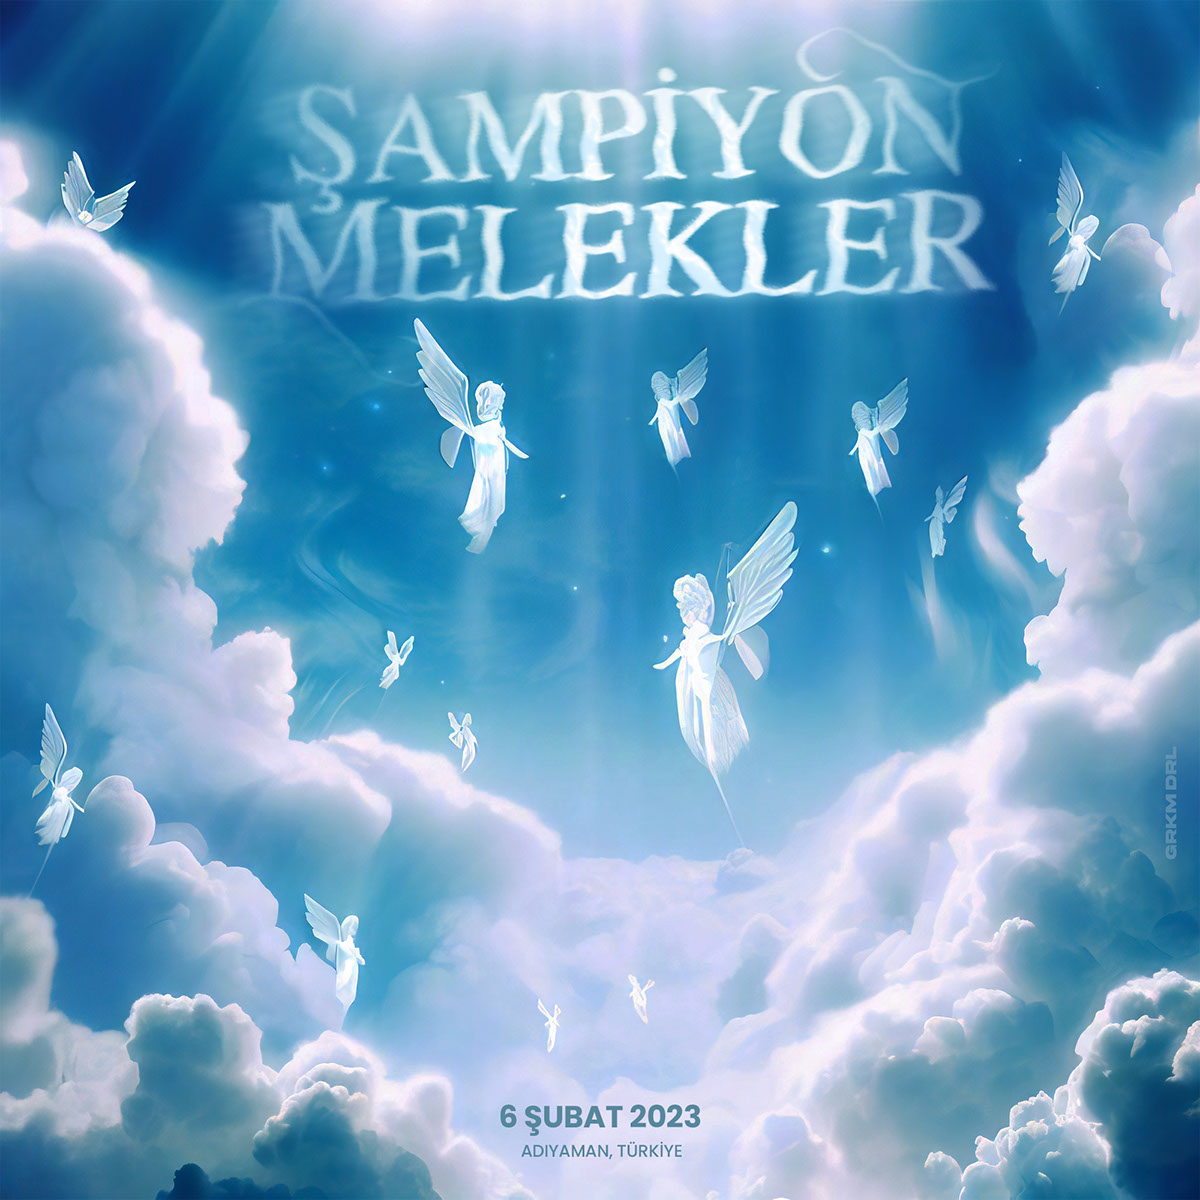 Sampiyon Melekler by gorkemdereli 2000px rendition image